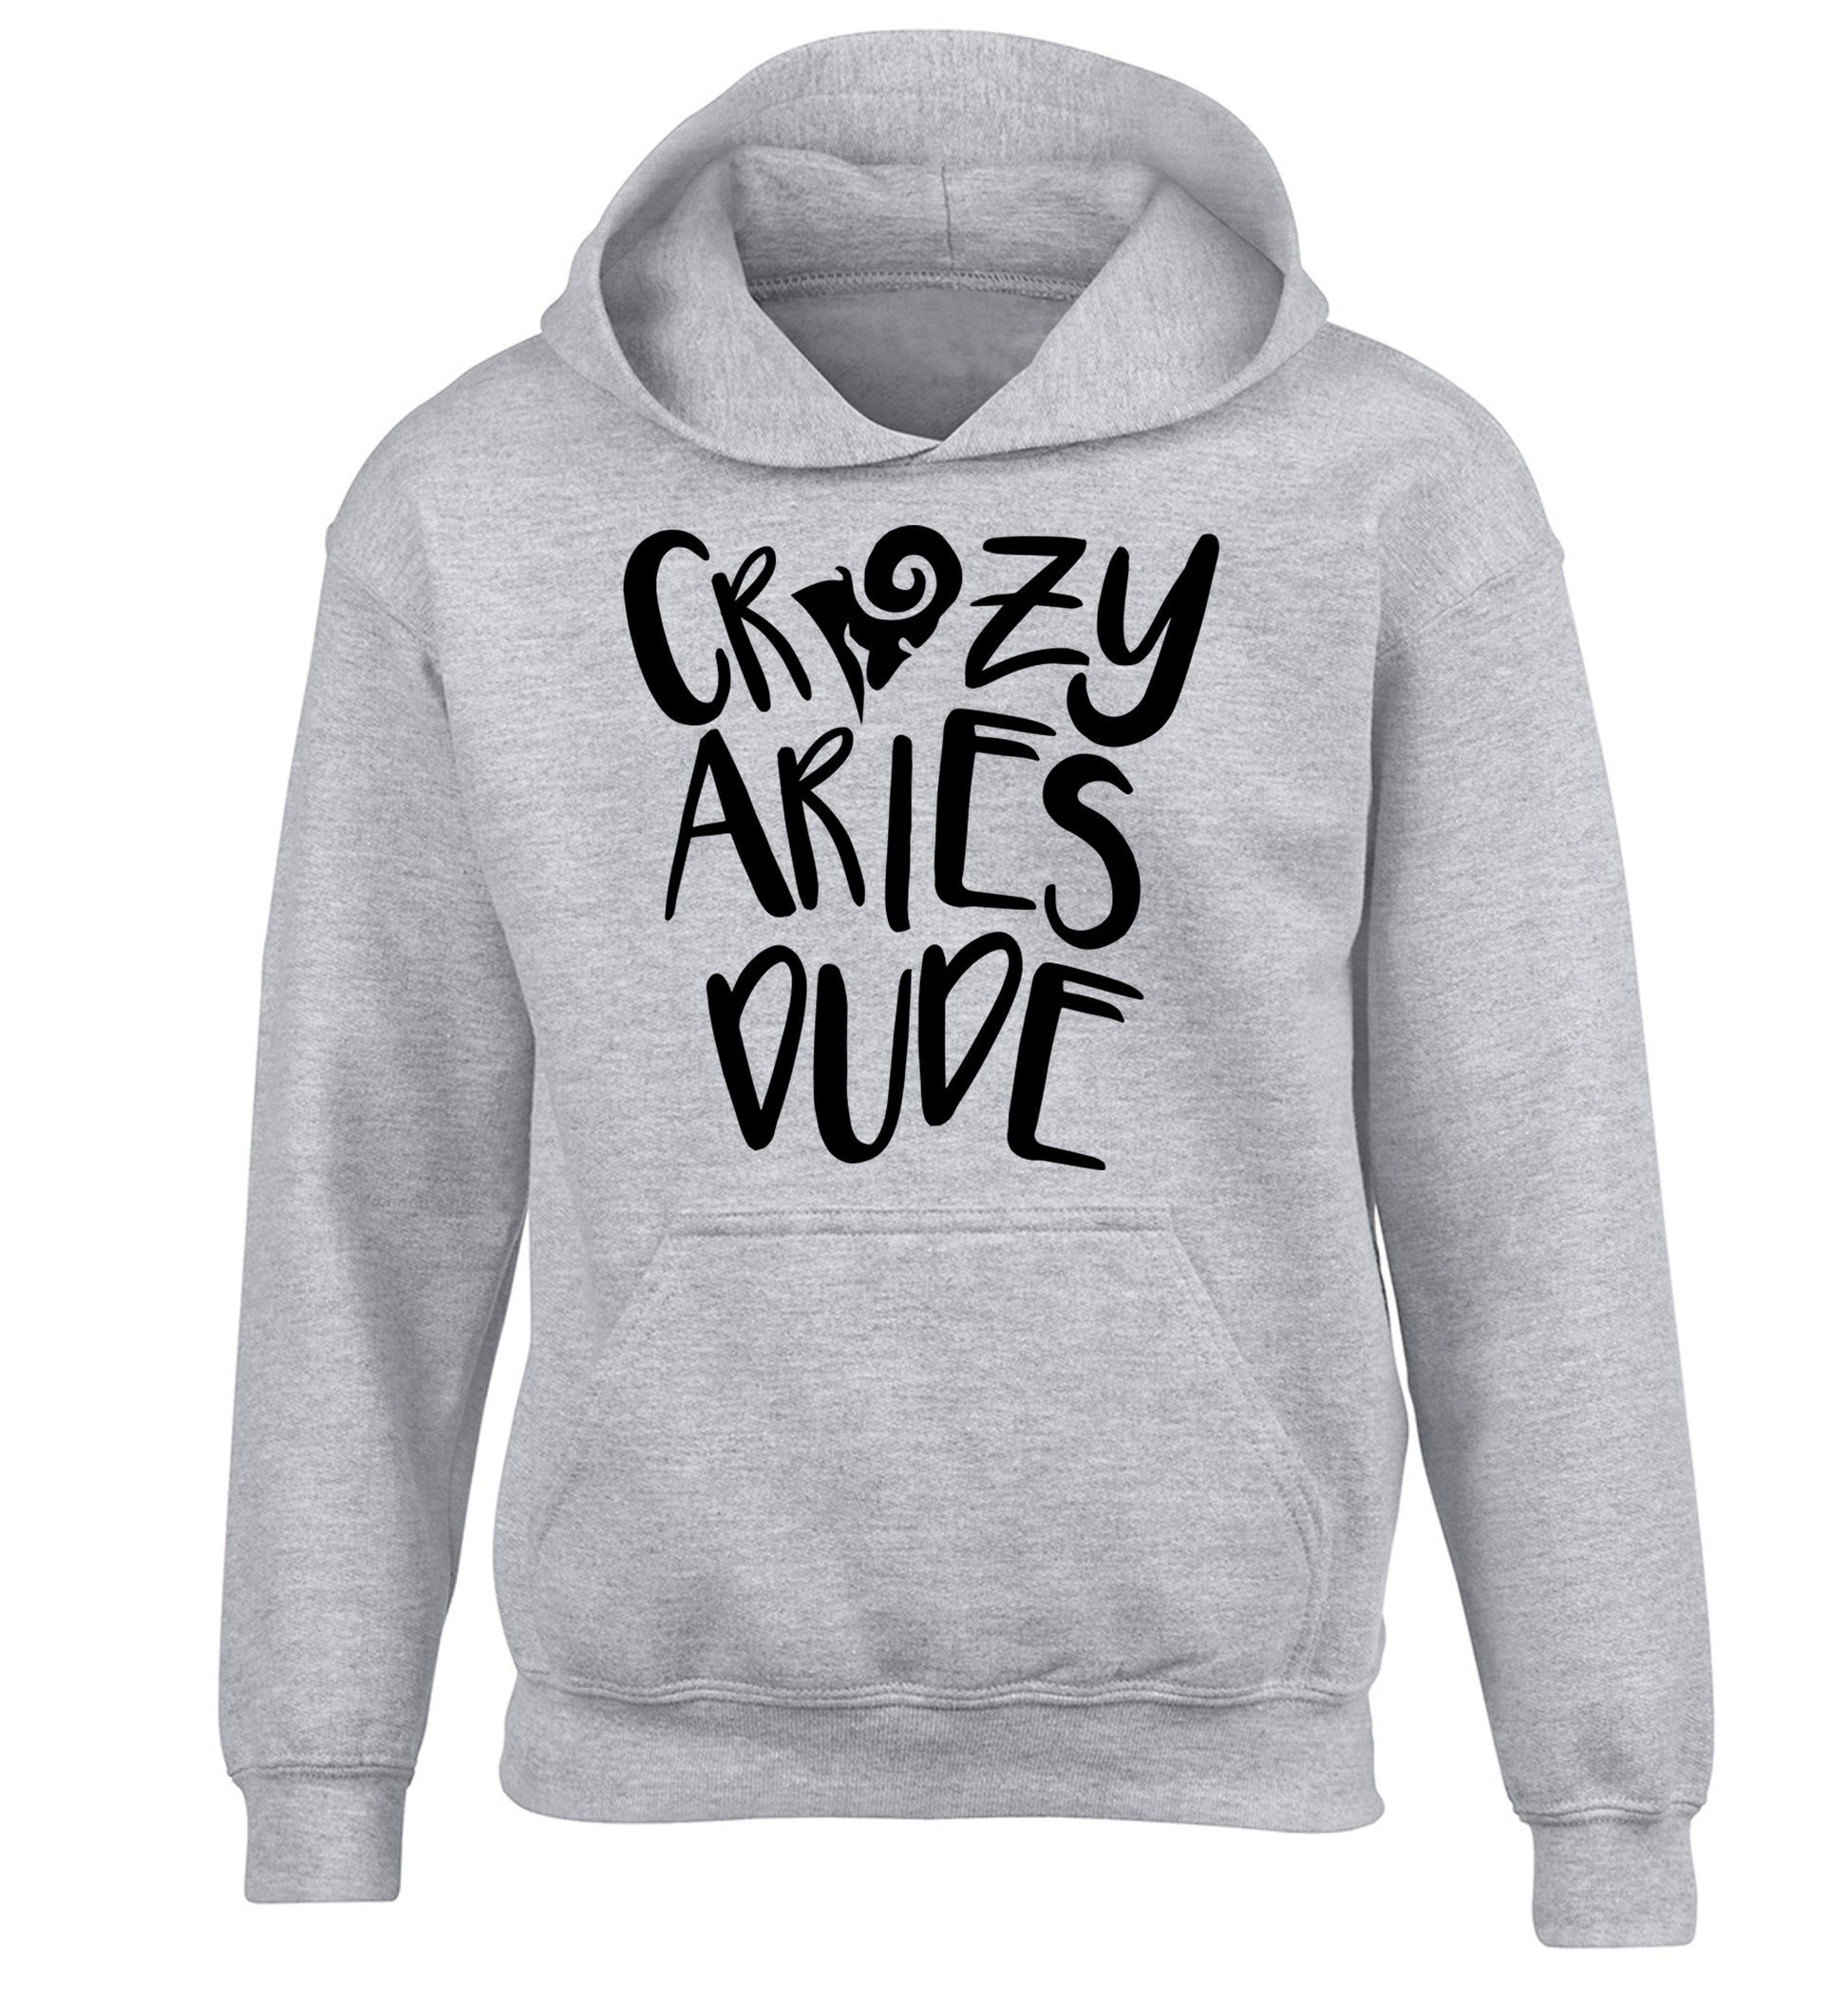 Crazy aries dude children's grey hoodie 12-13 Years